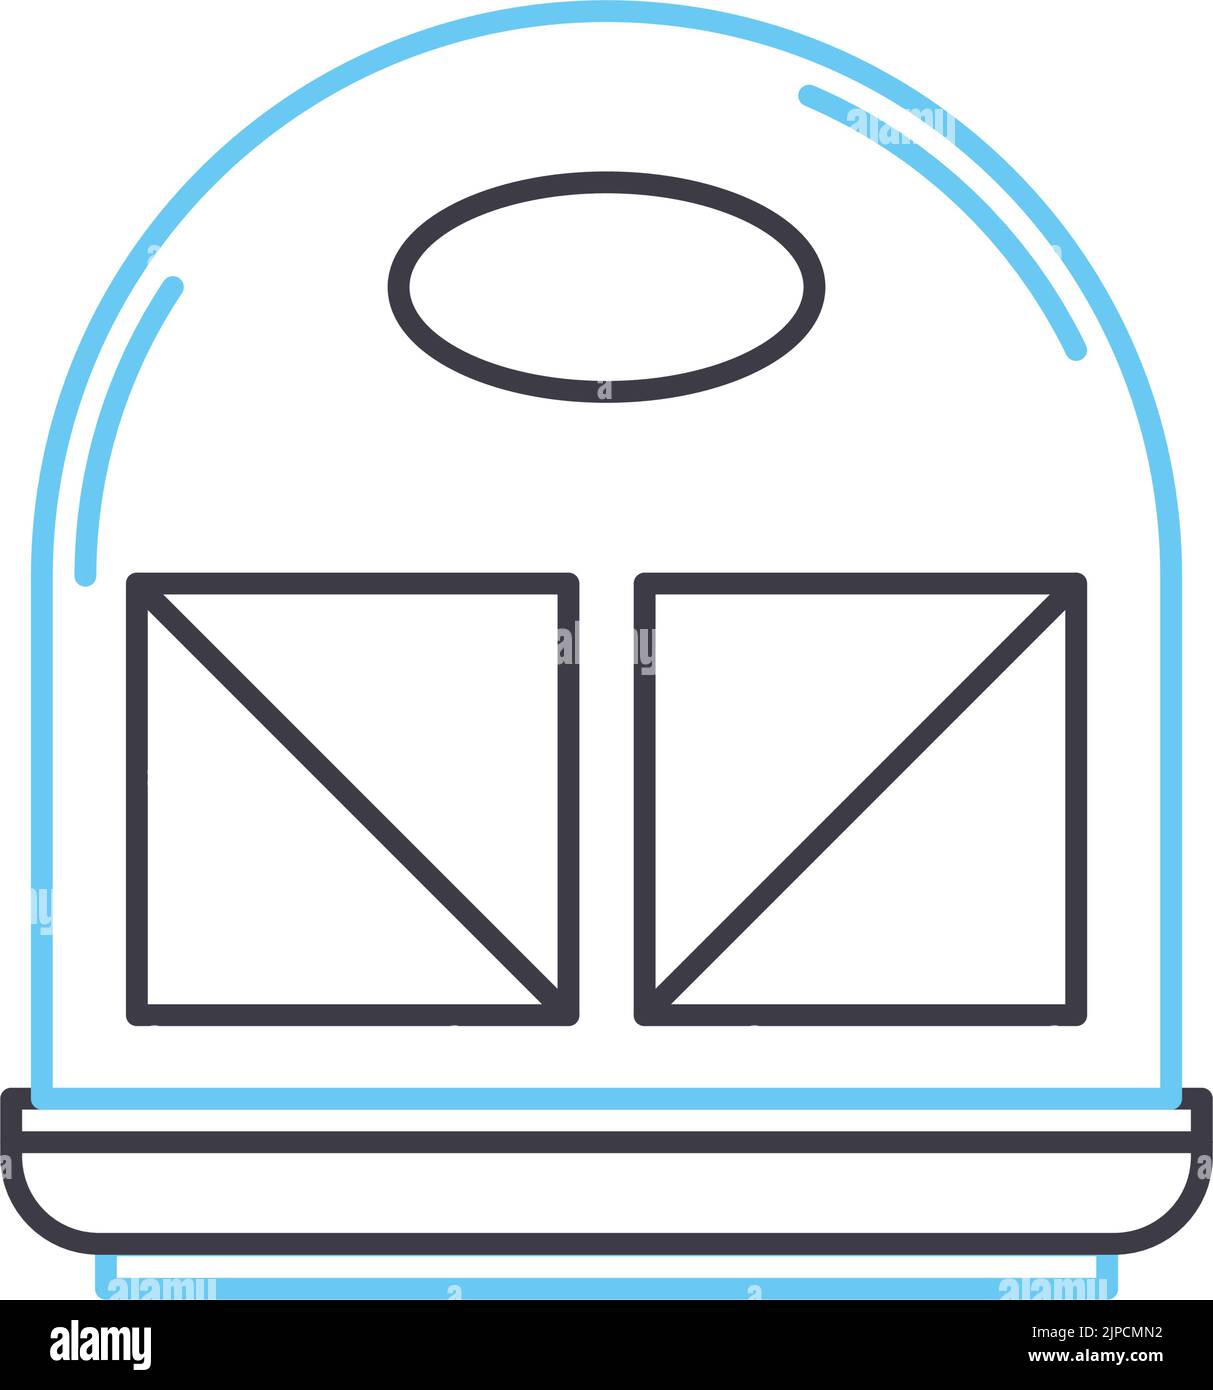 sandwich maker line icon, outline symbol, vector illustration, concept sign Stock Vector